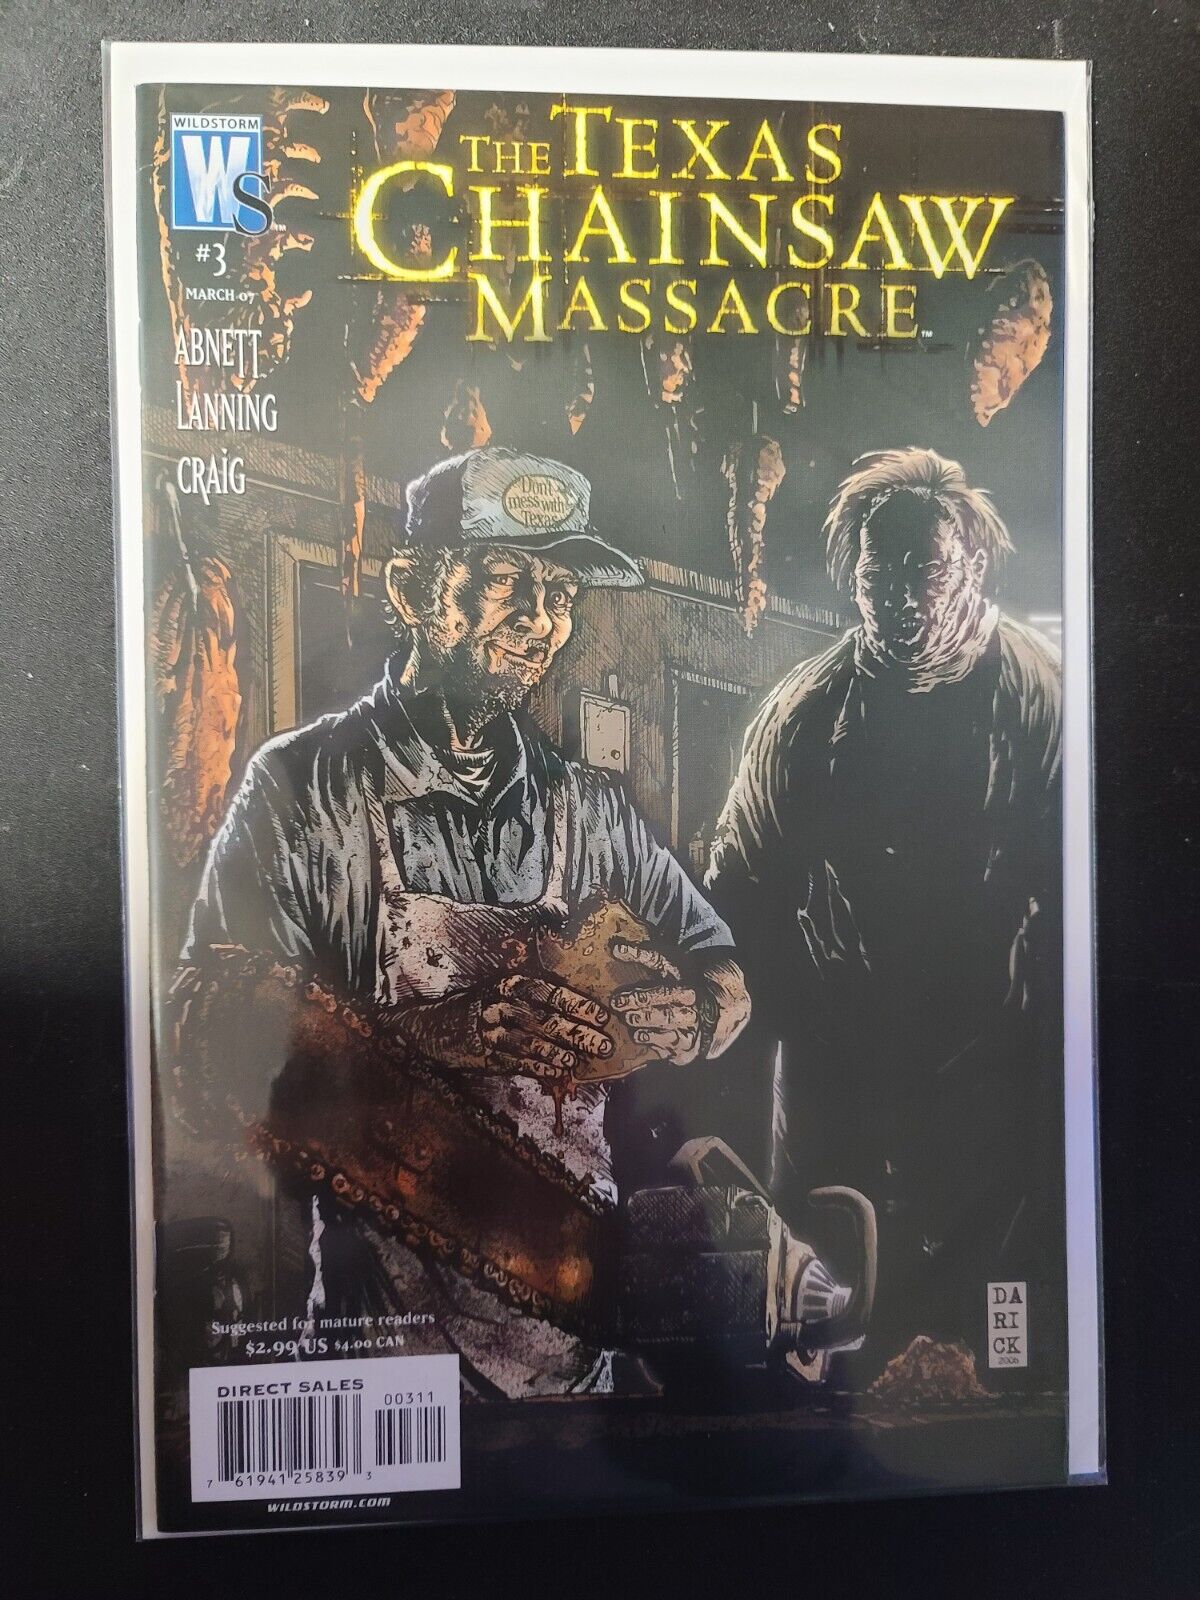 The Texas Chainsaw Massacre #3 (DC Comics/Wildstorm, March 2007)